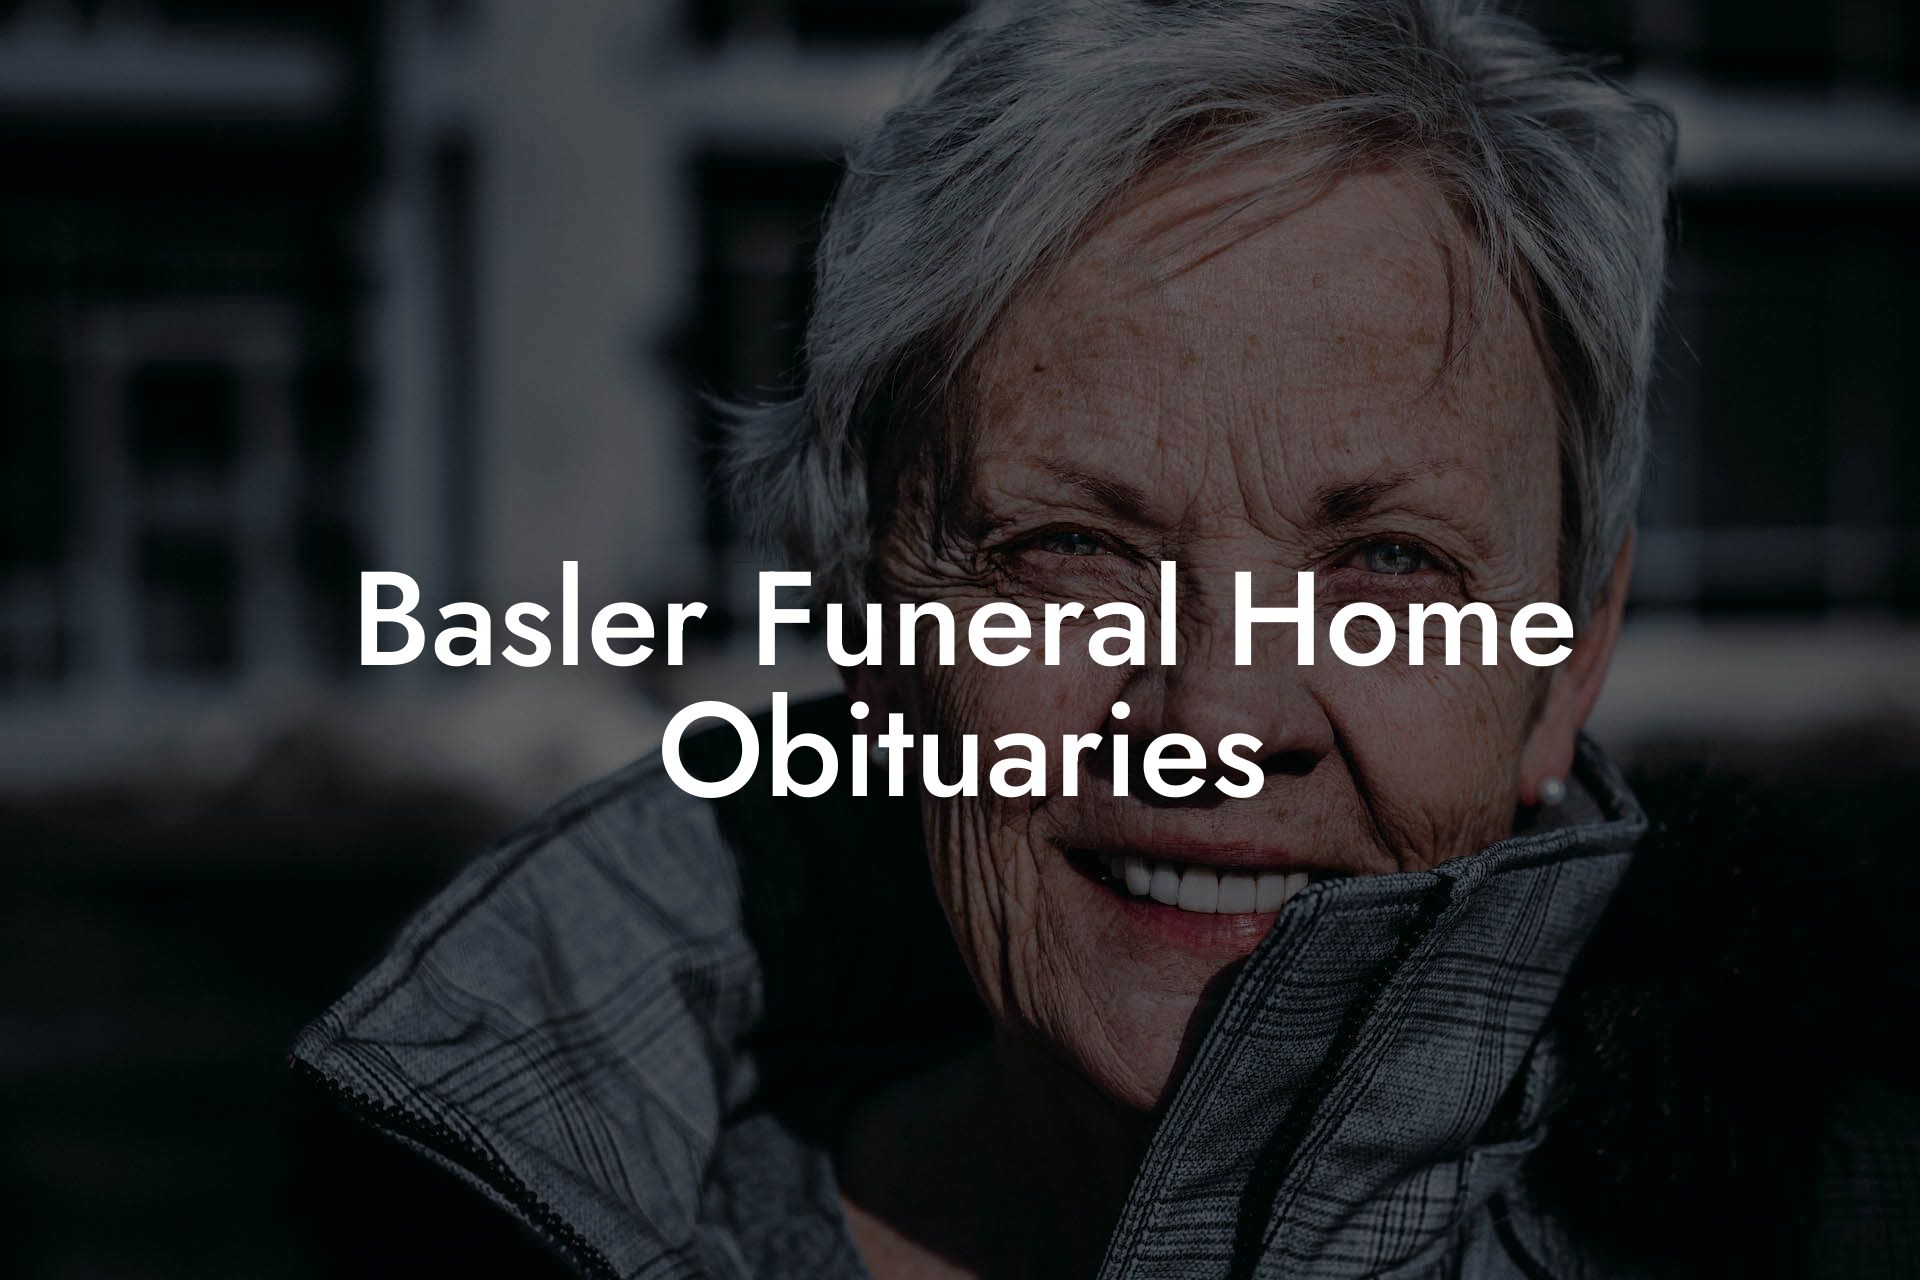 Basler Funeral Home Obituaries